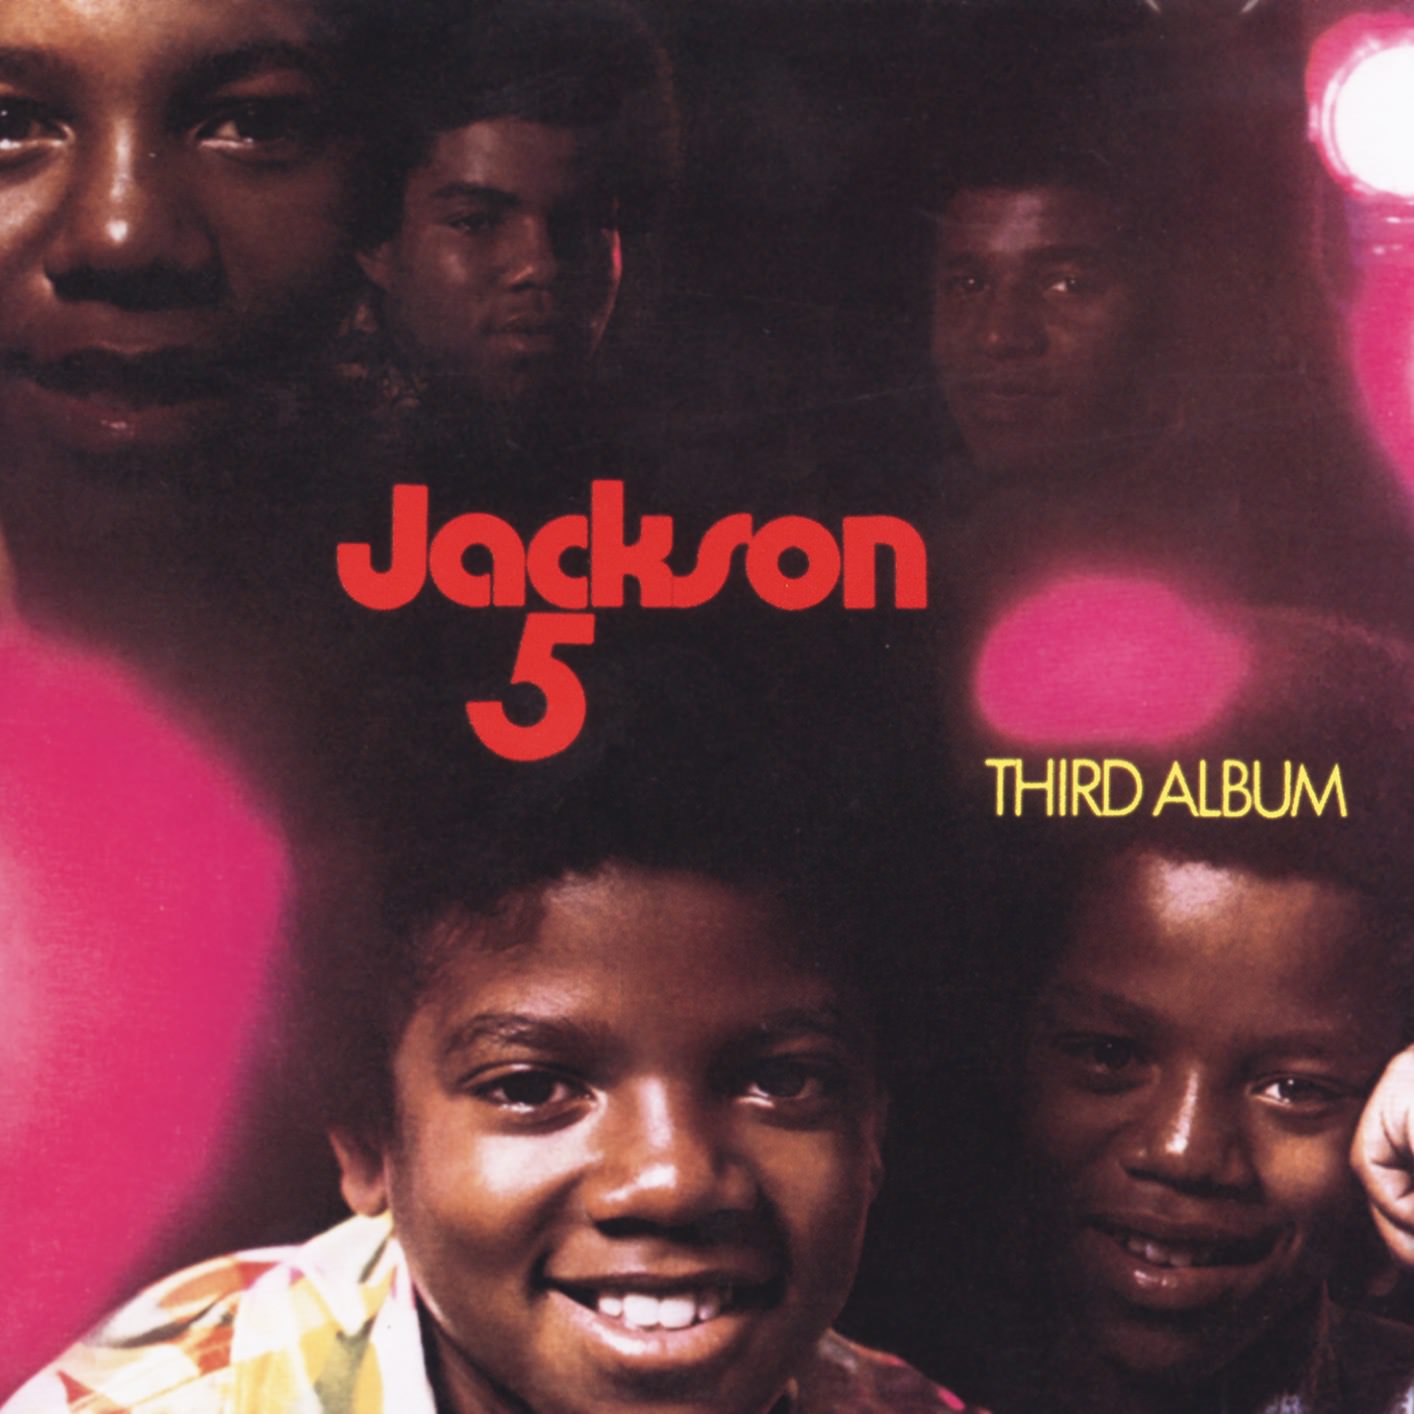 Jackson 5 - Third Album (1970/2016) [HDTracks FLAC 24bit/192kHz]